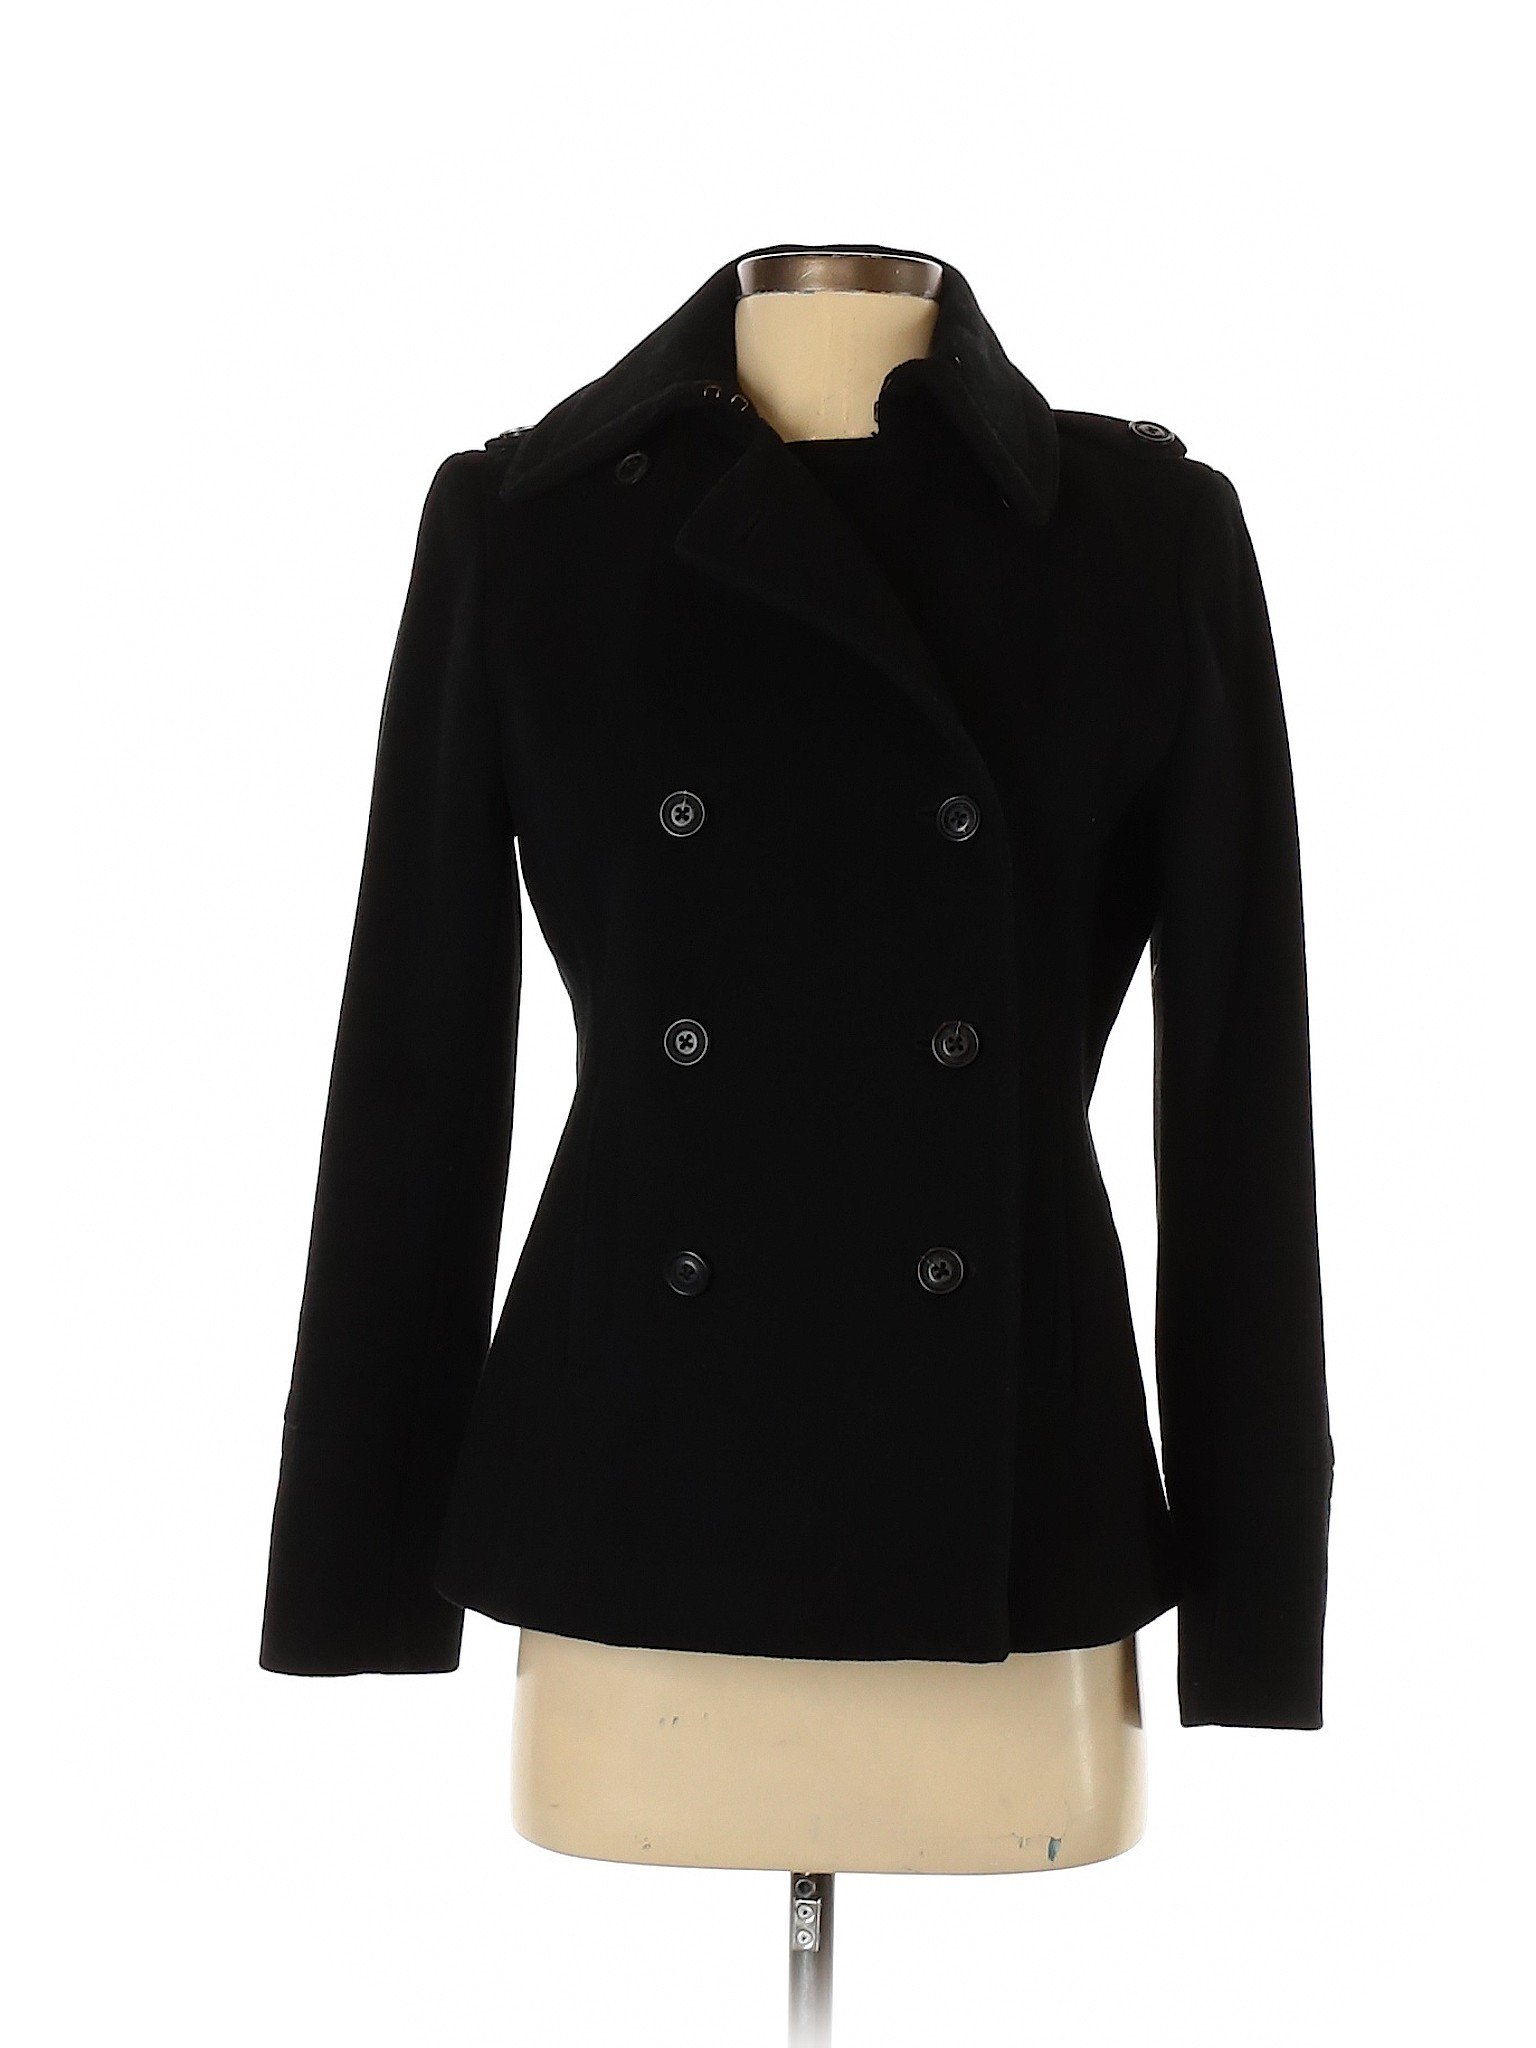 J.Crew Women Black Wool Coat S | eBay